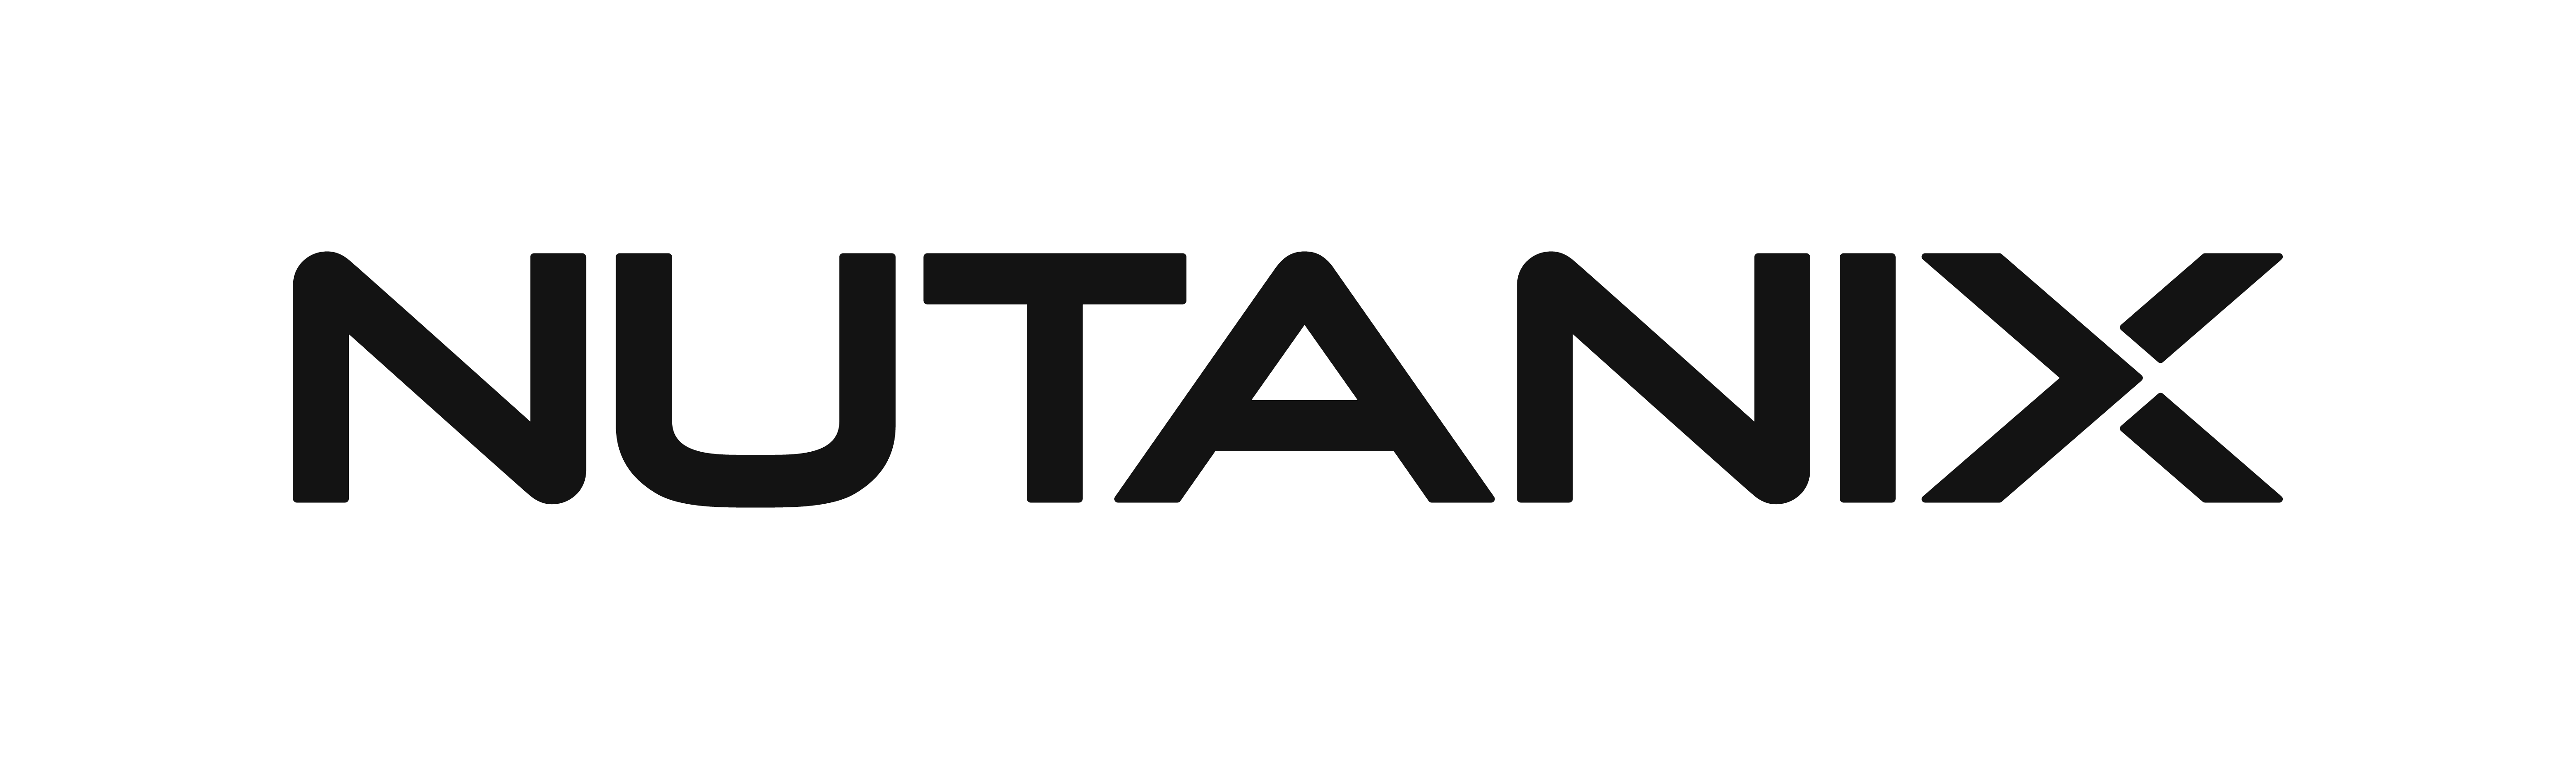 TAGITM Nutanix Partner